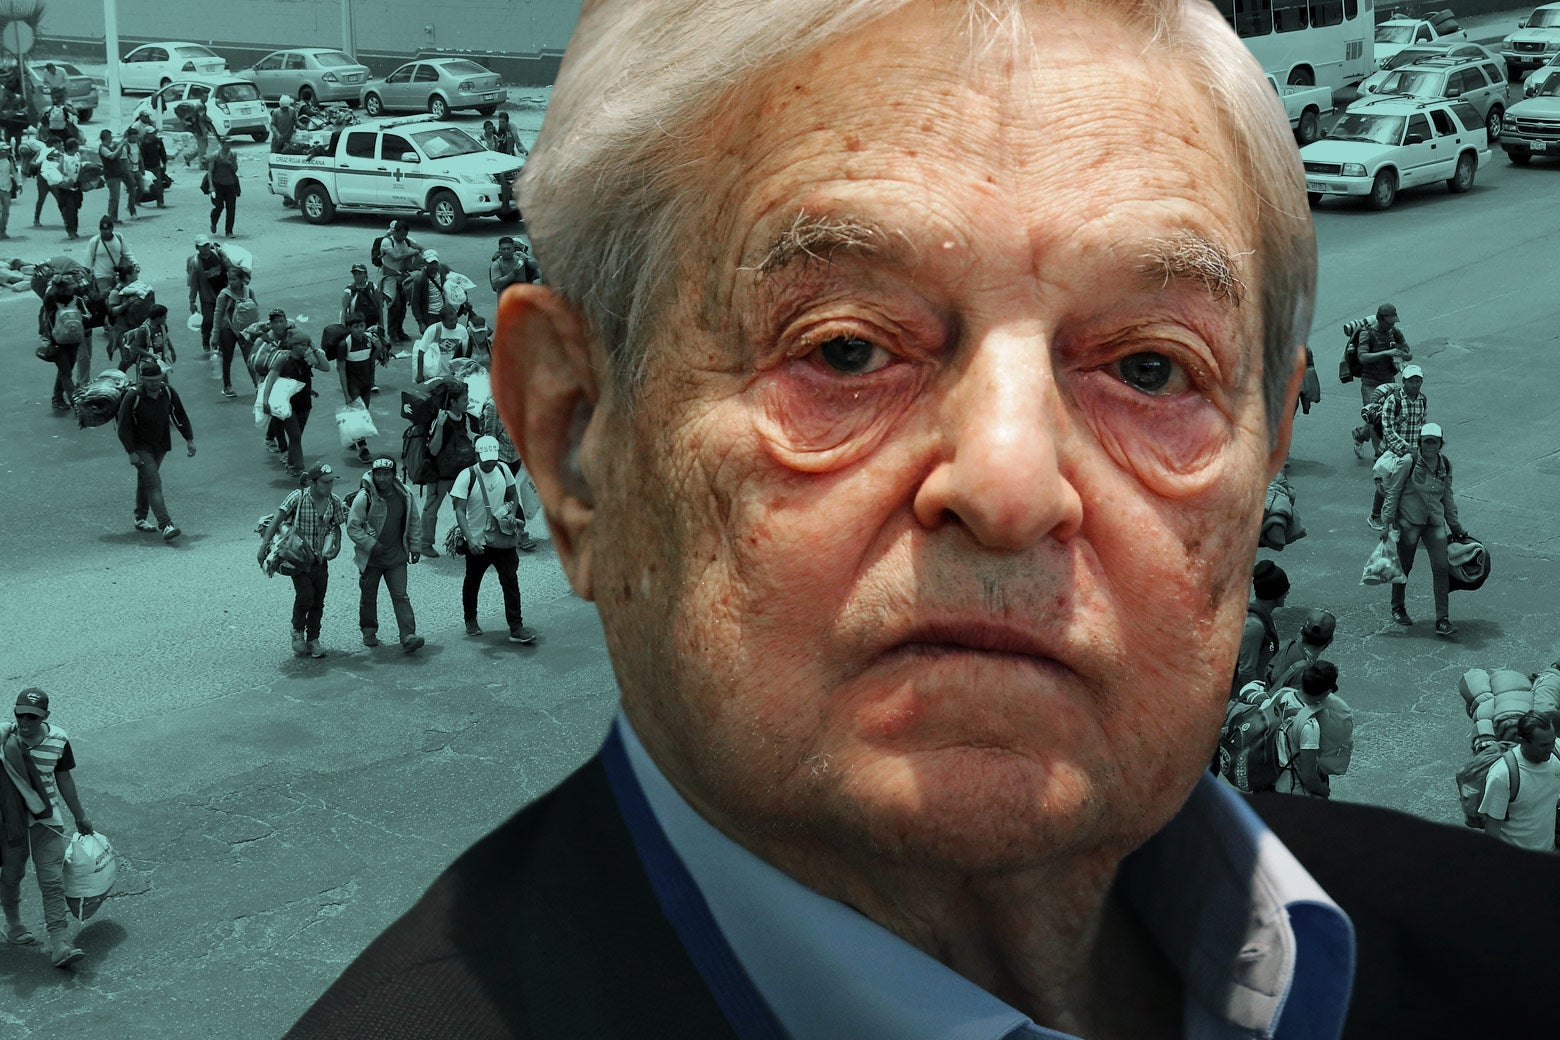 George Soros with the "migrant caravan" from 2018 behind him.